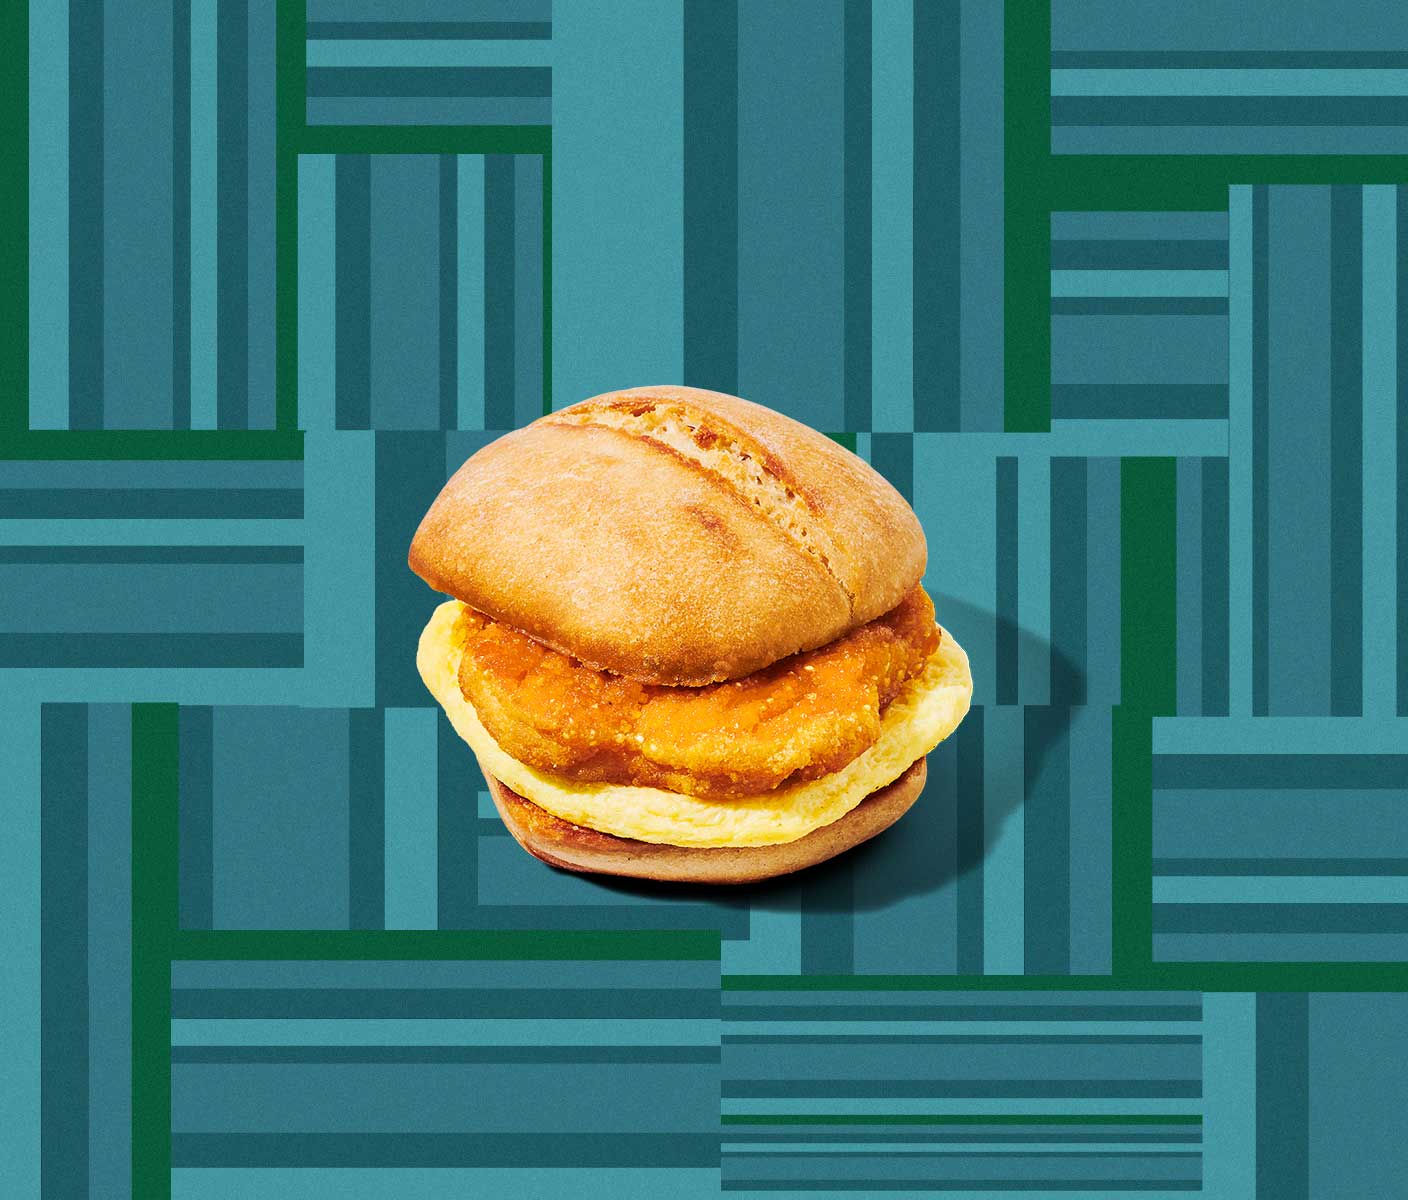 A breakfast sandwich showing breaded chicken on top of an egg patty.